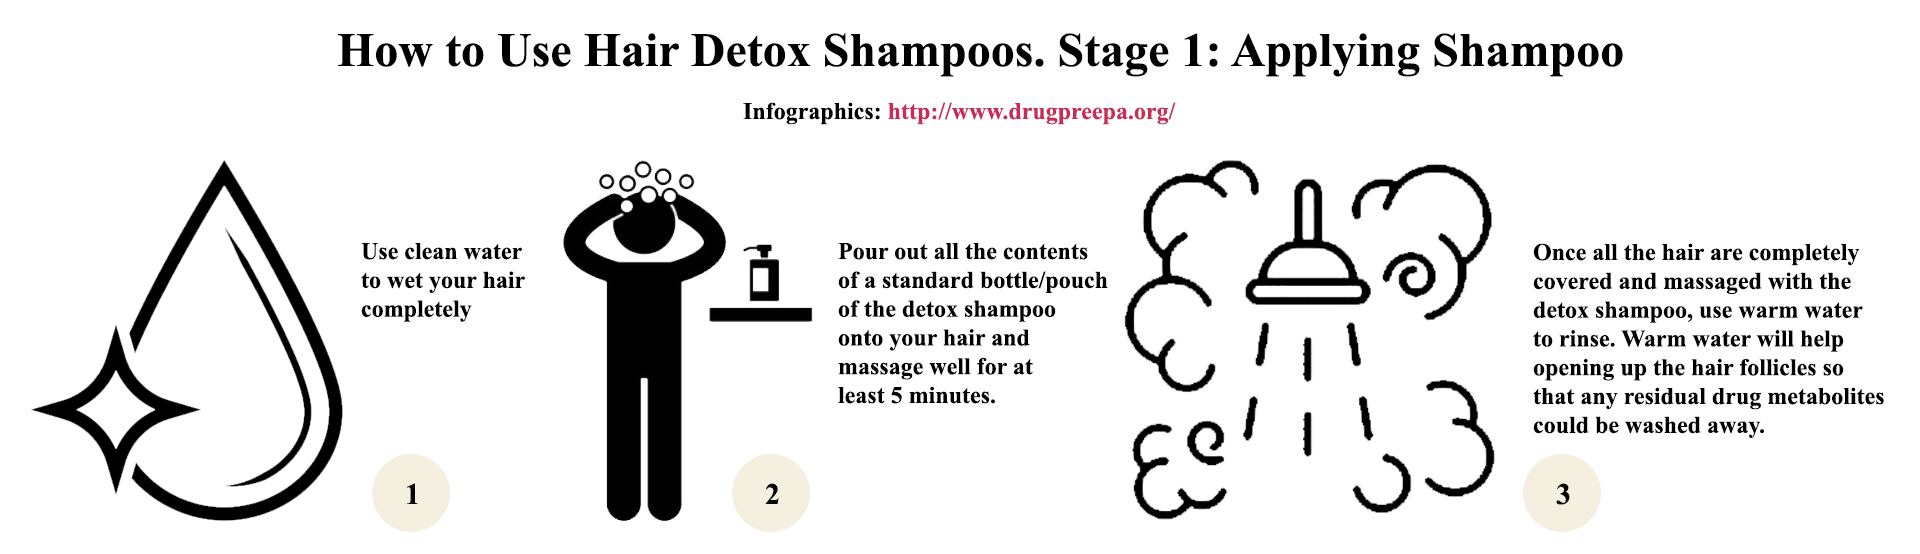 how to use hair detox shampoos applying shampoo infographics